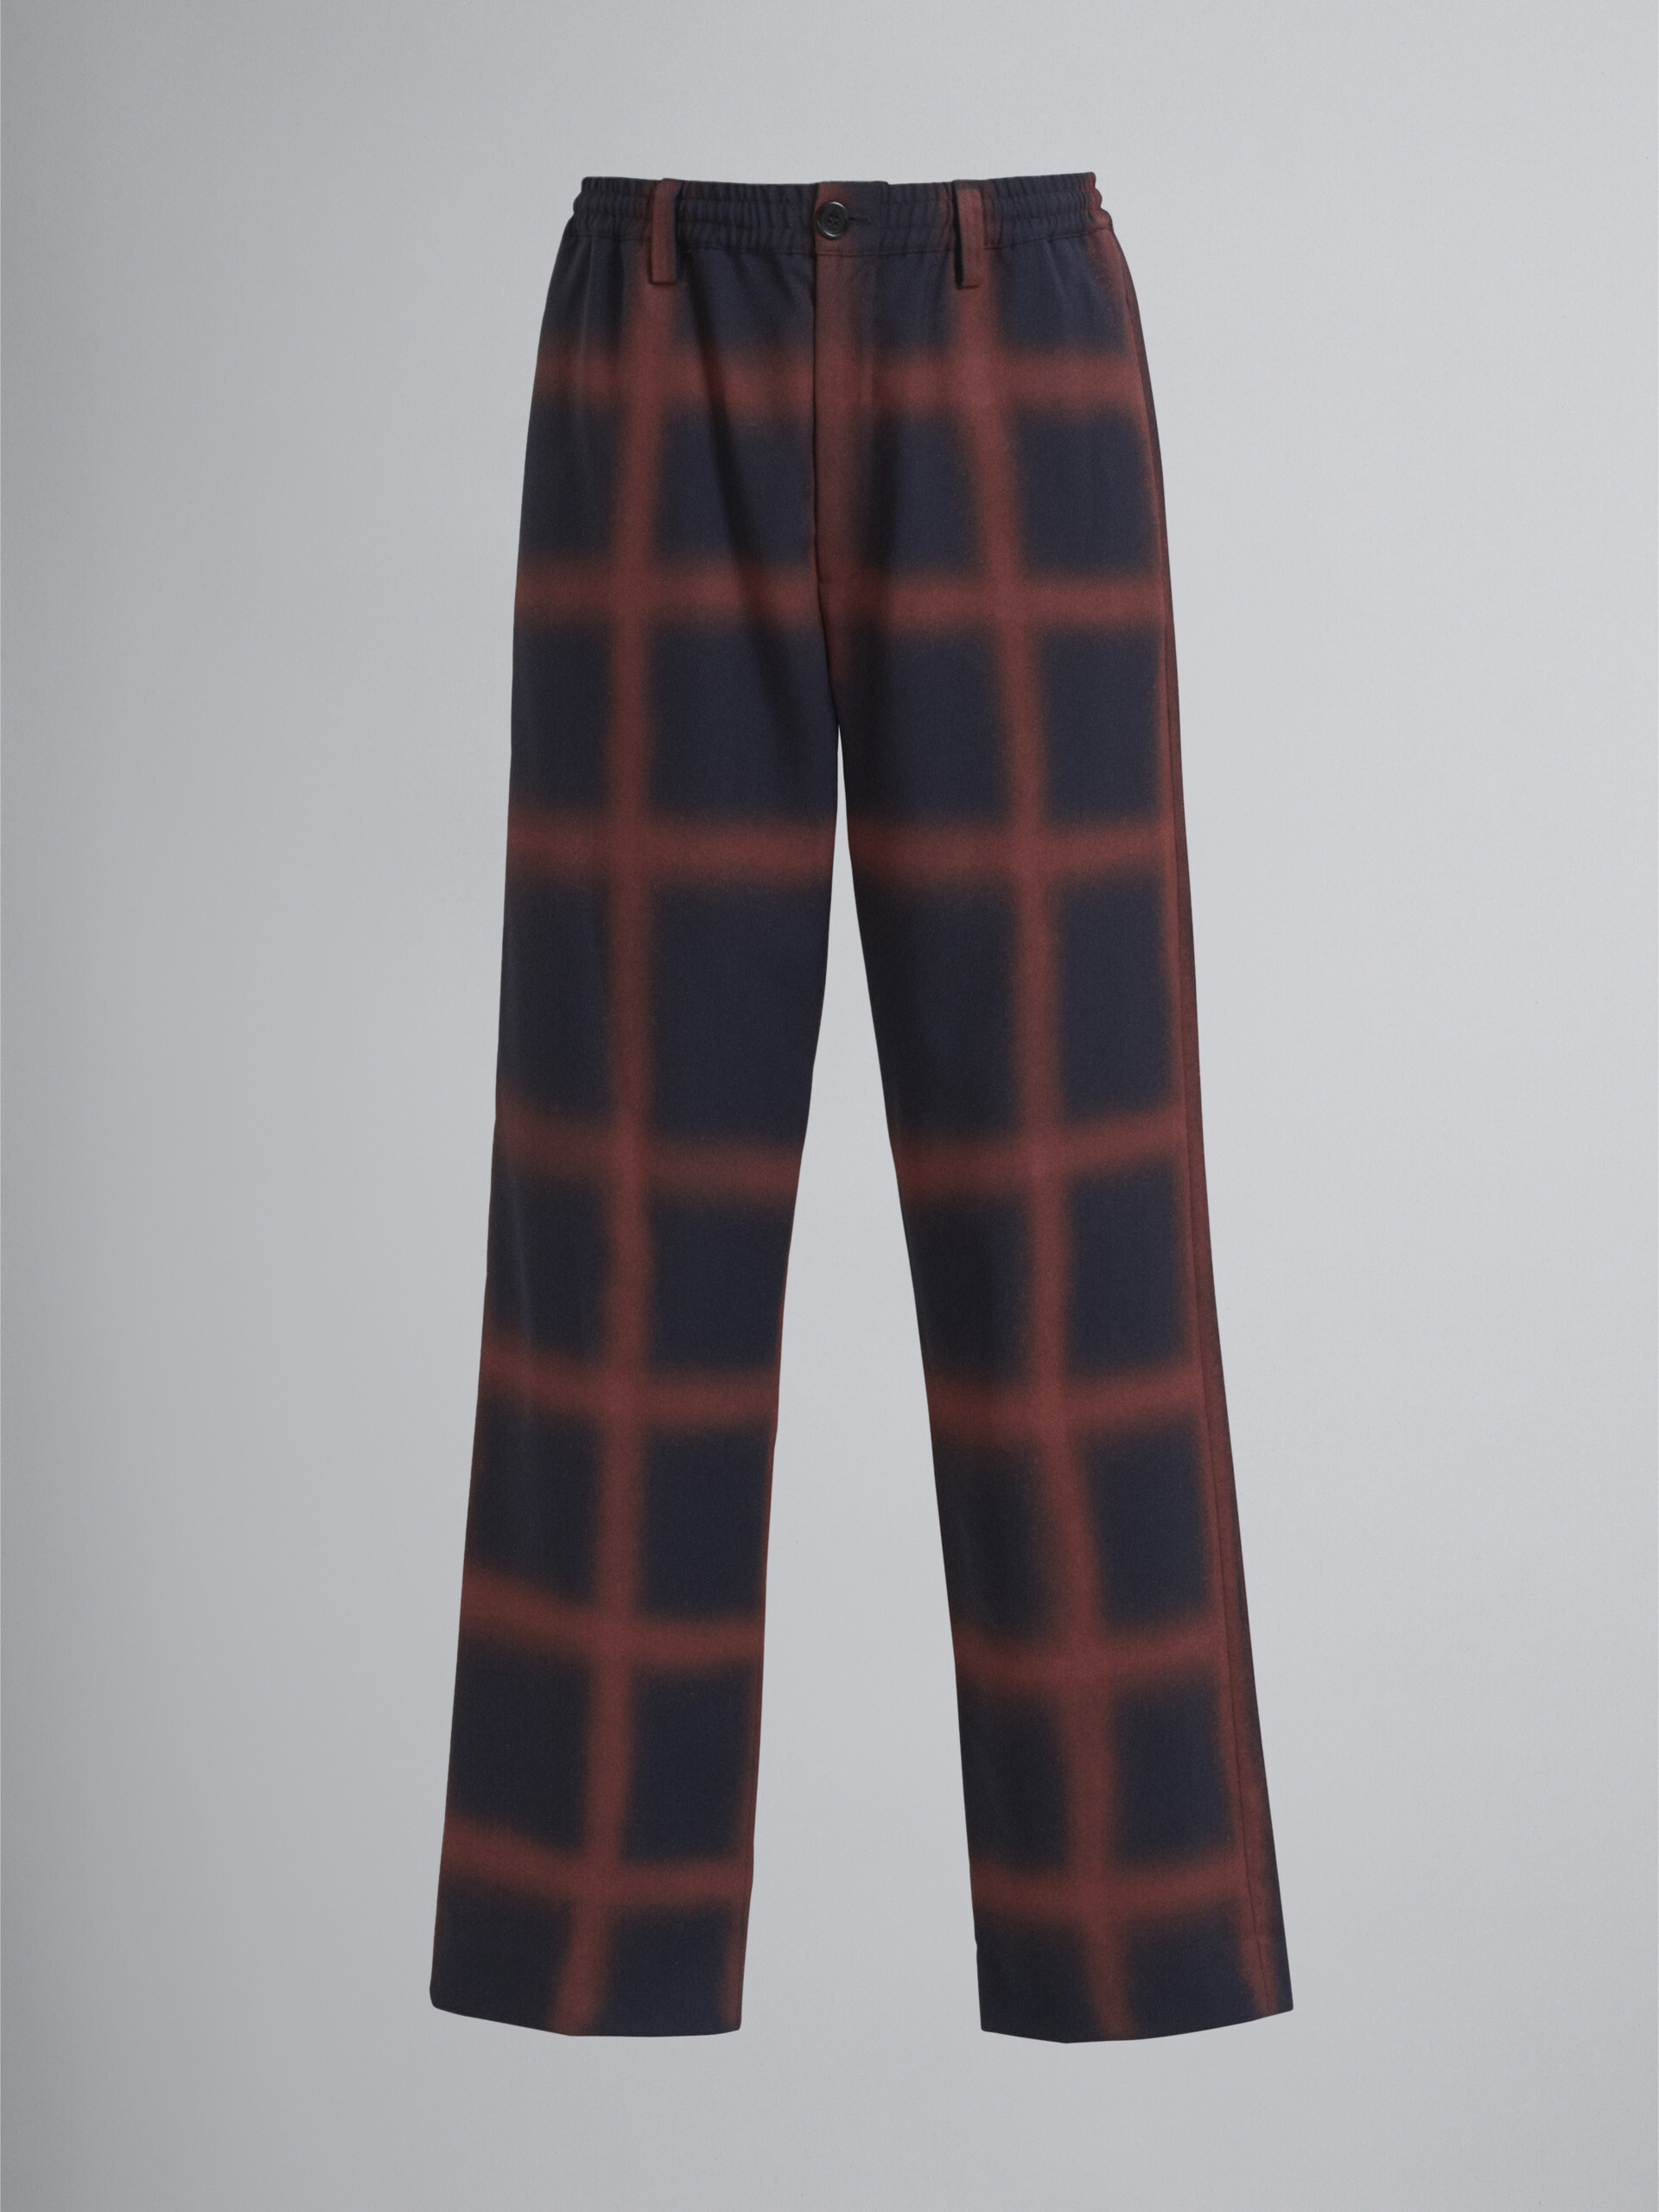 Pantaloni in fresco di lana con motivo a riquadri aerografato - Pantaloni - Image 1